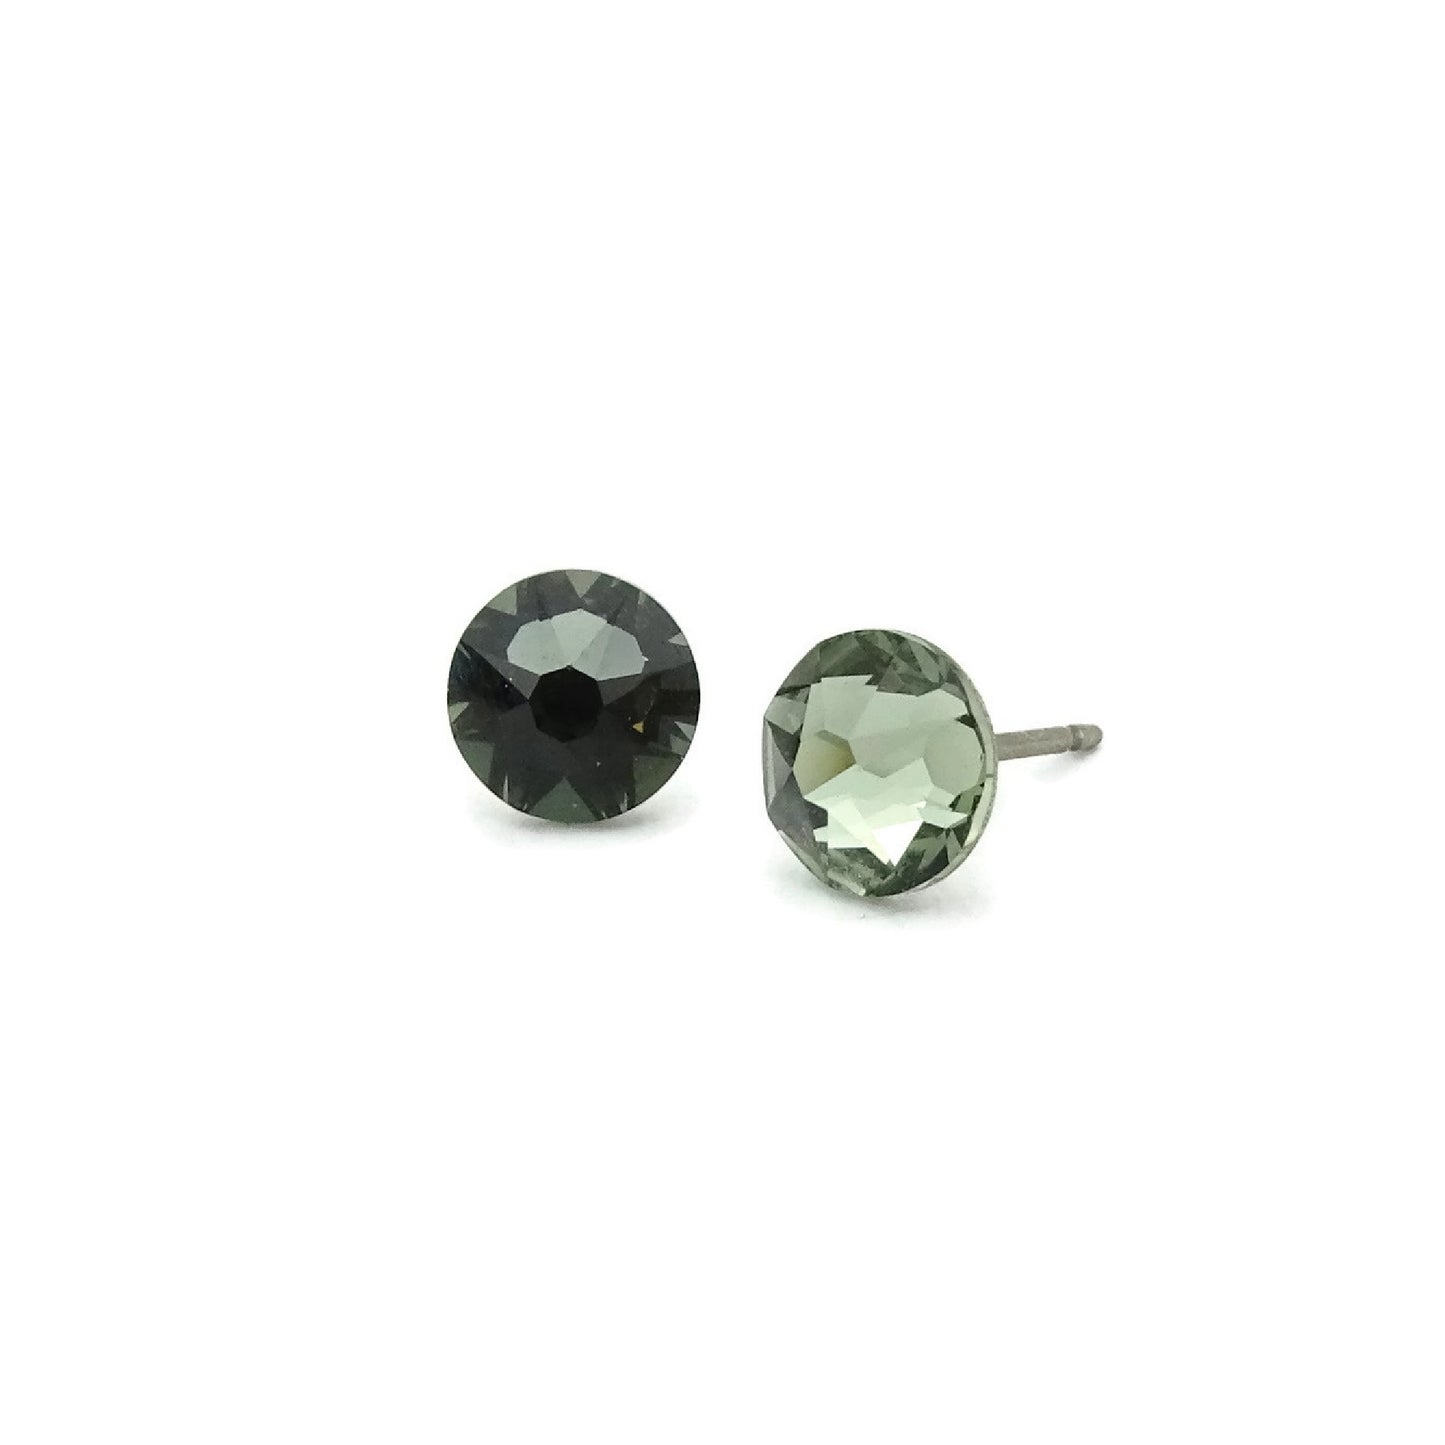 Black Diamond Titanium Stud Earrings for Sensitive Ears